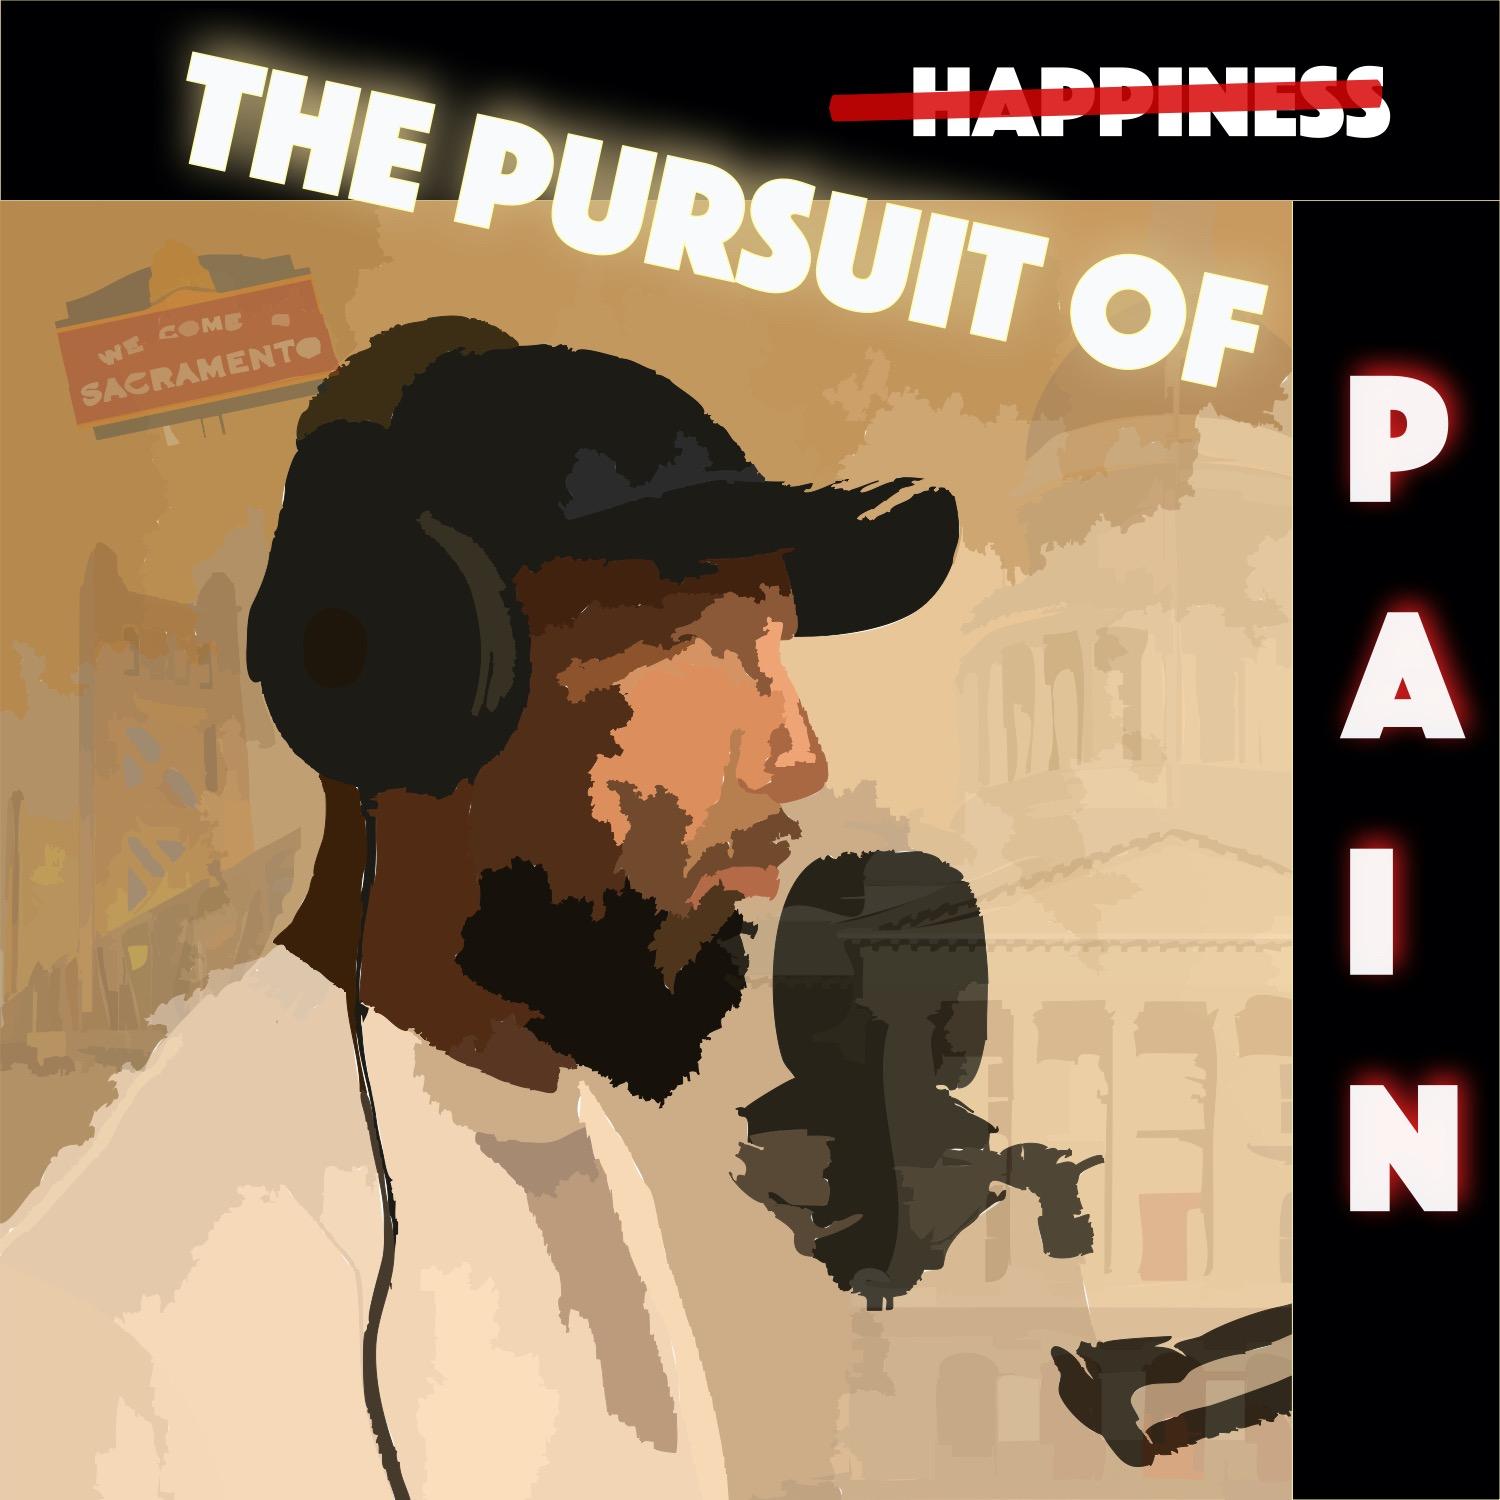 The Pursuit of Pain